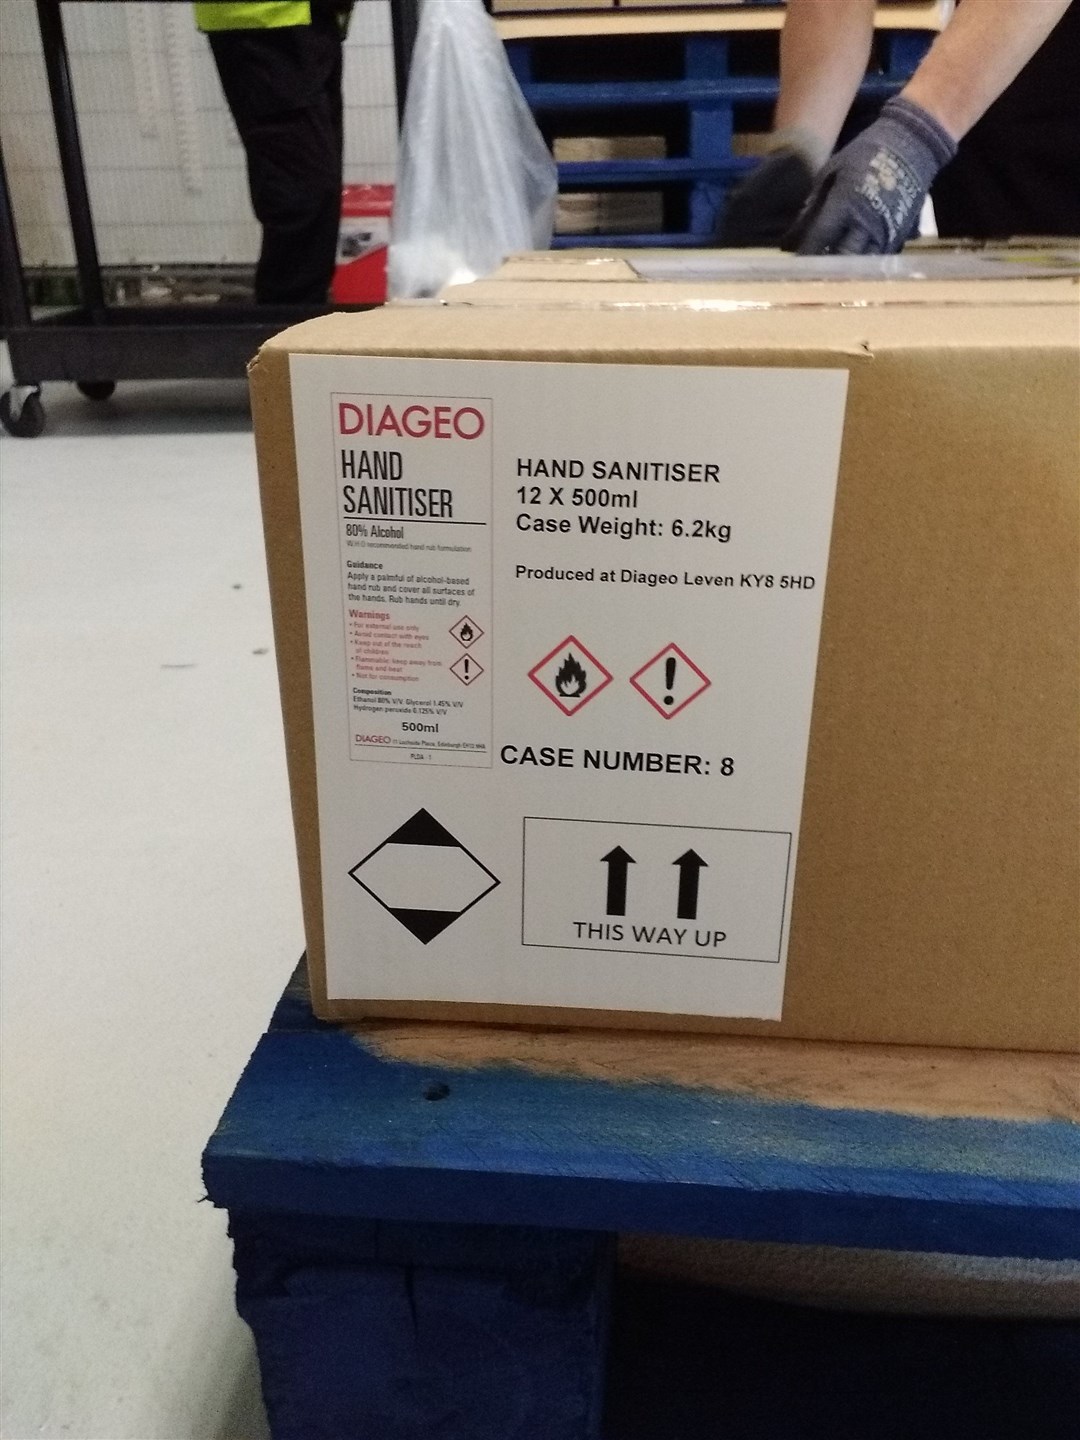 Diageo will begin distributing more than 55,000 bottles of its hand sanitiser across Scotland this week.